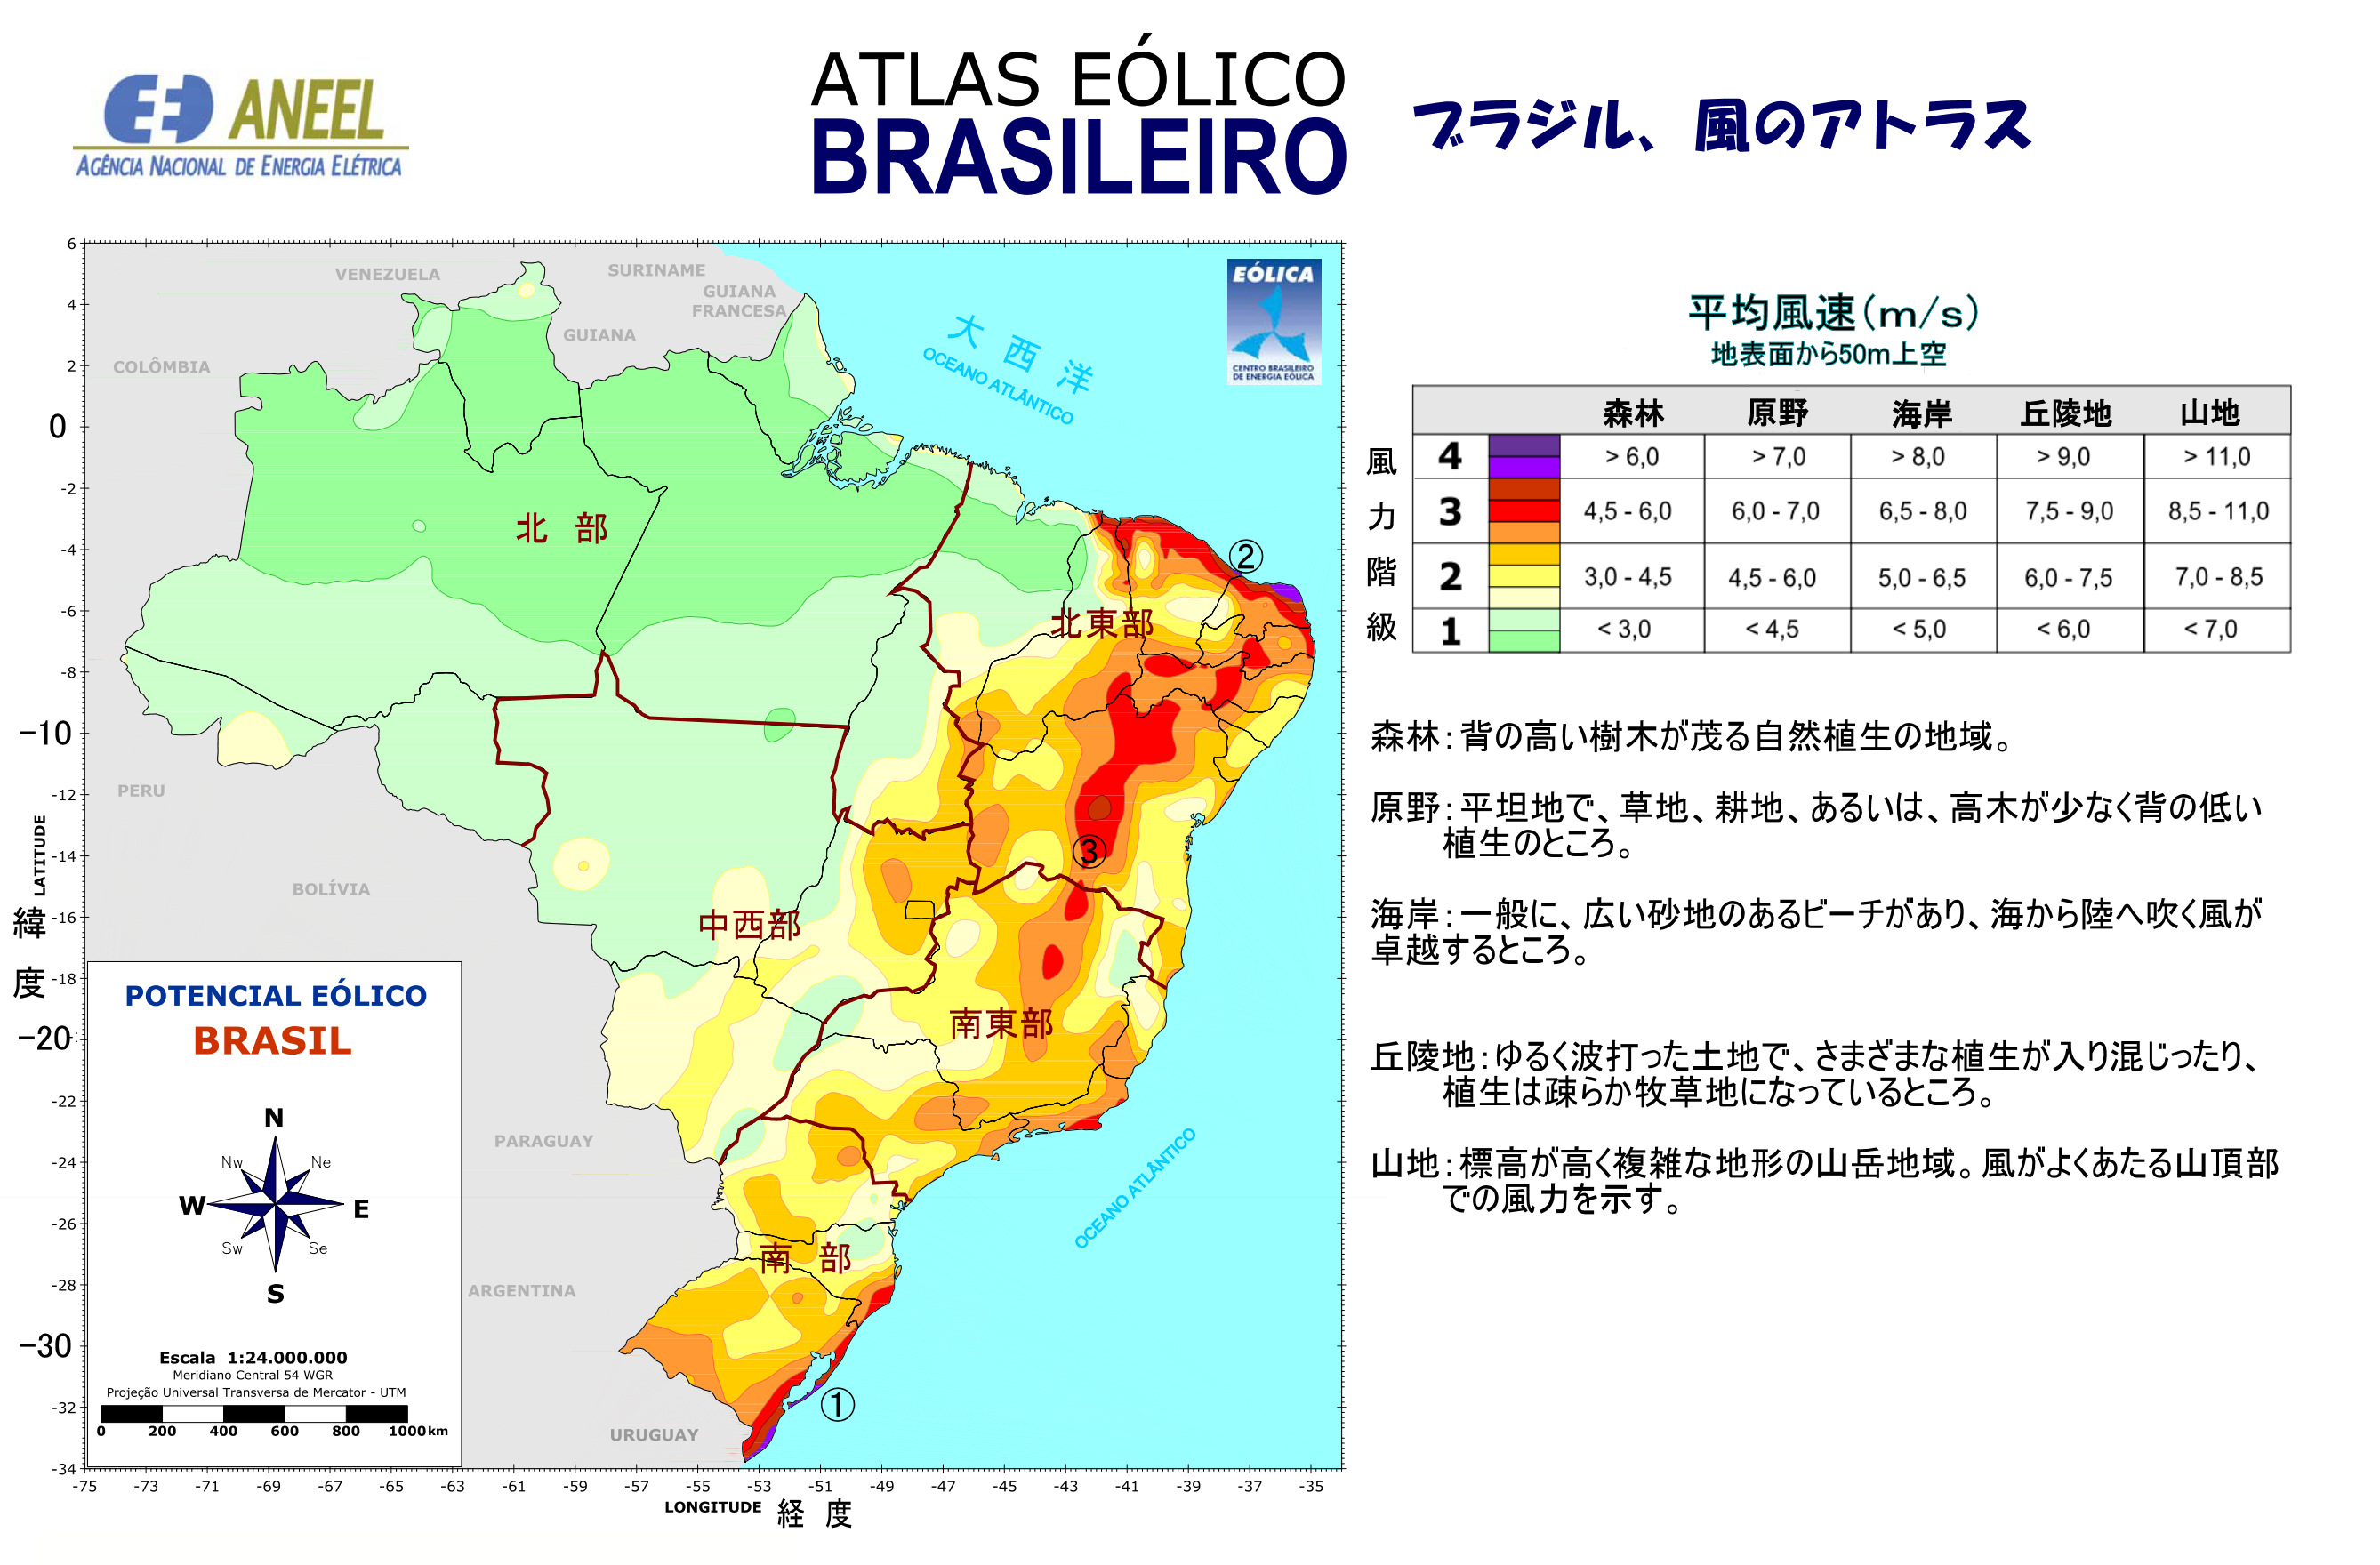 Distribution of wind power in Brazil